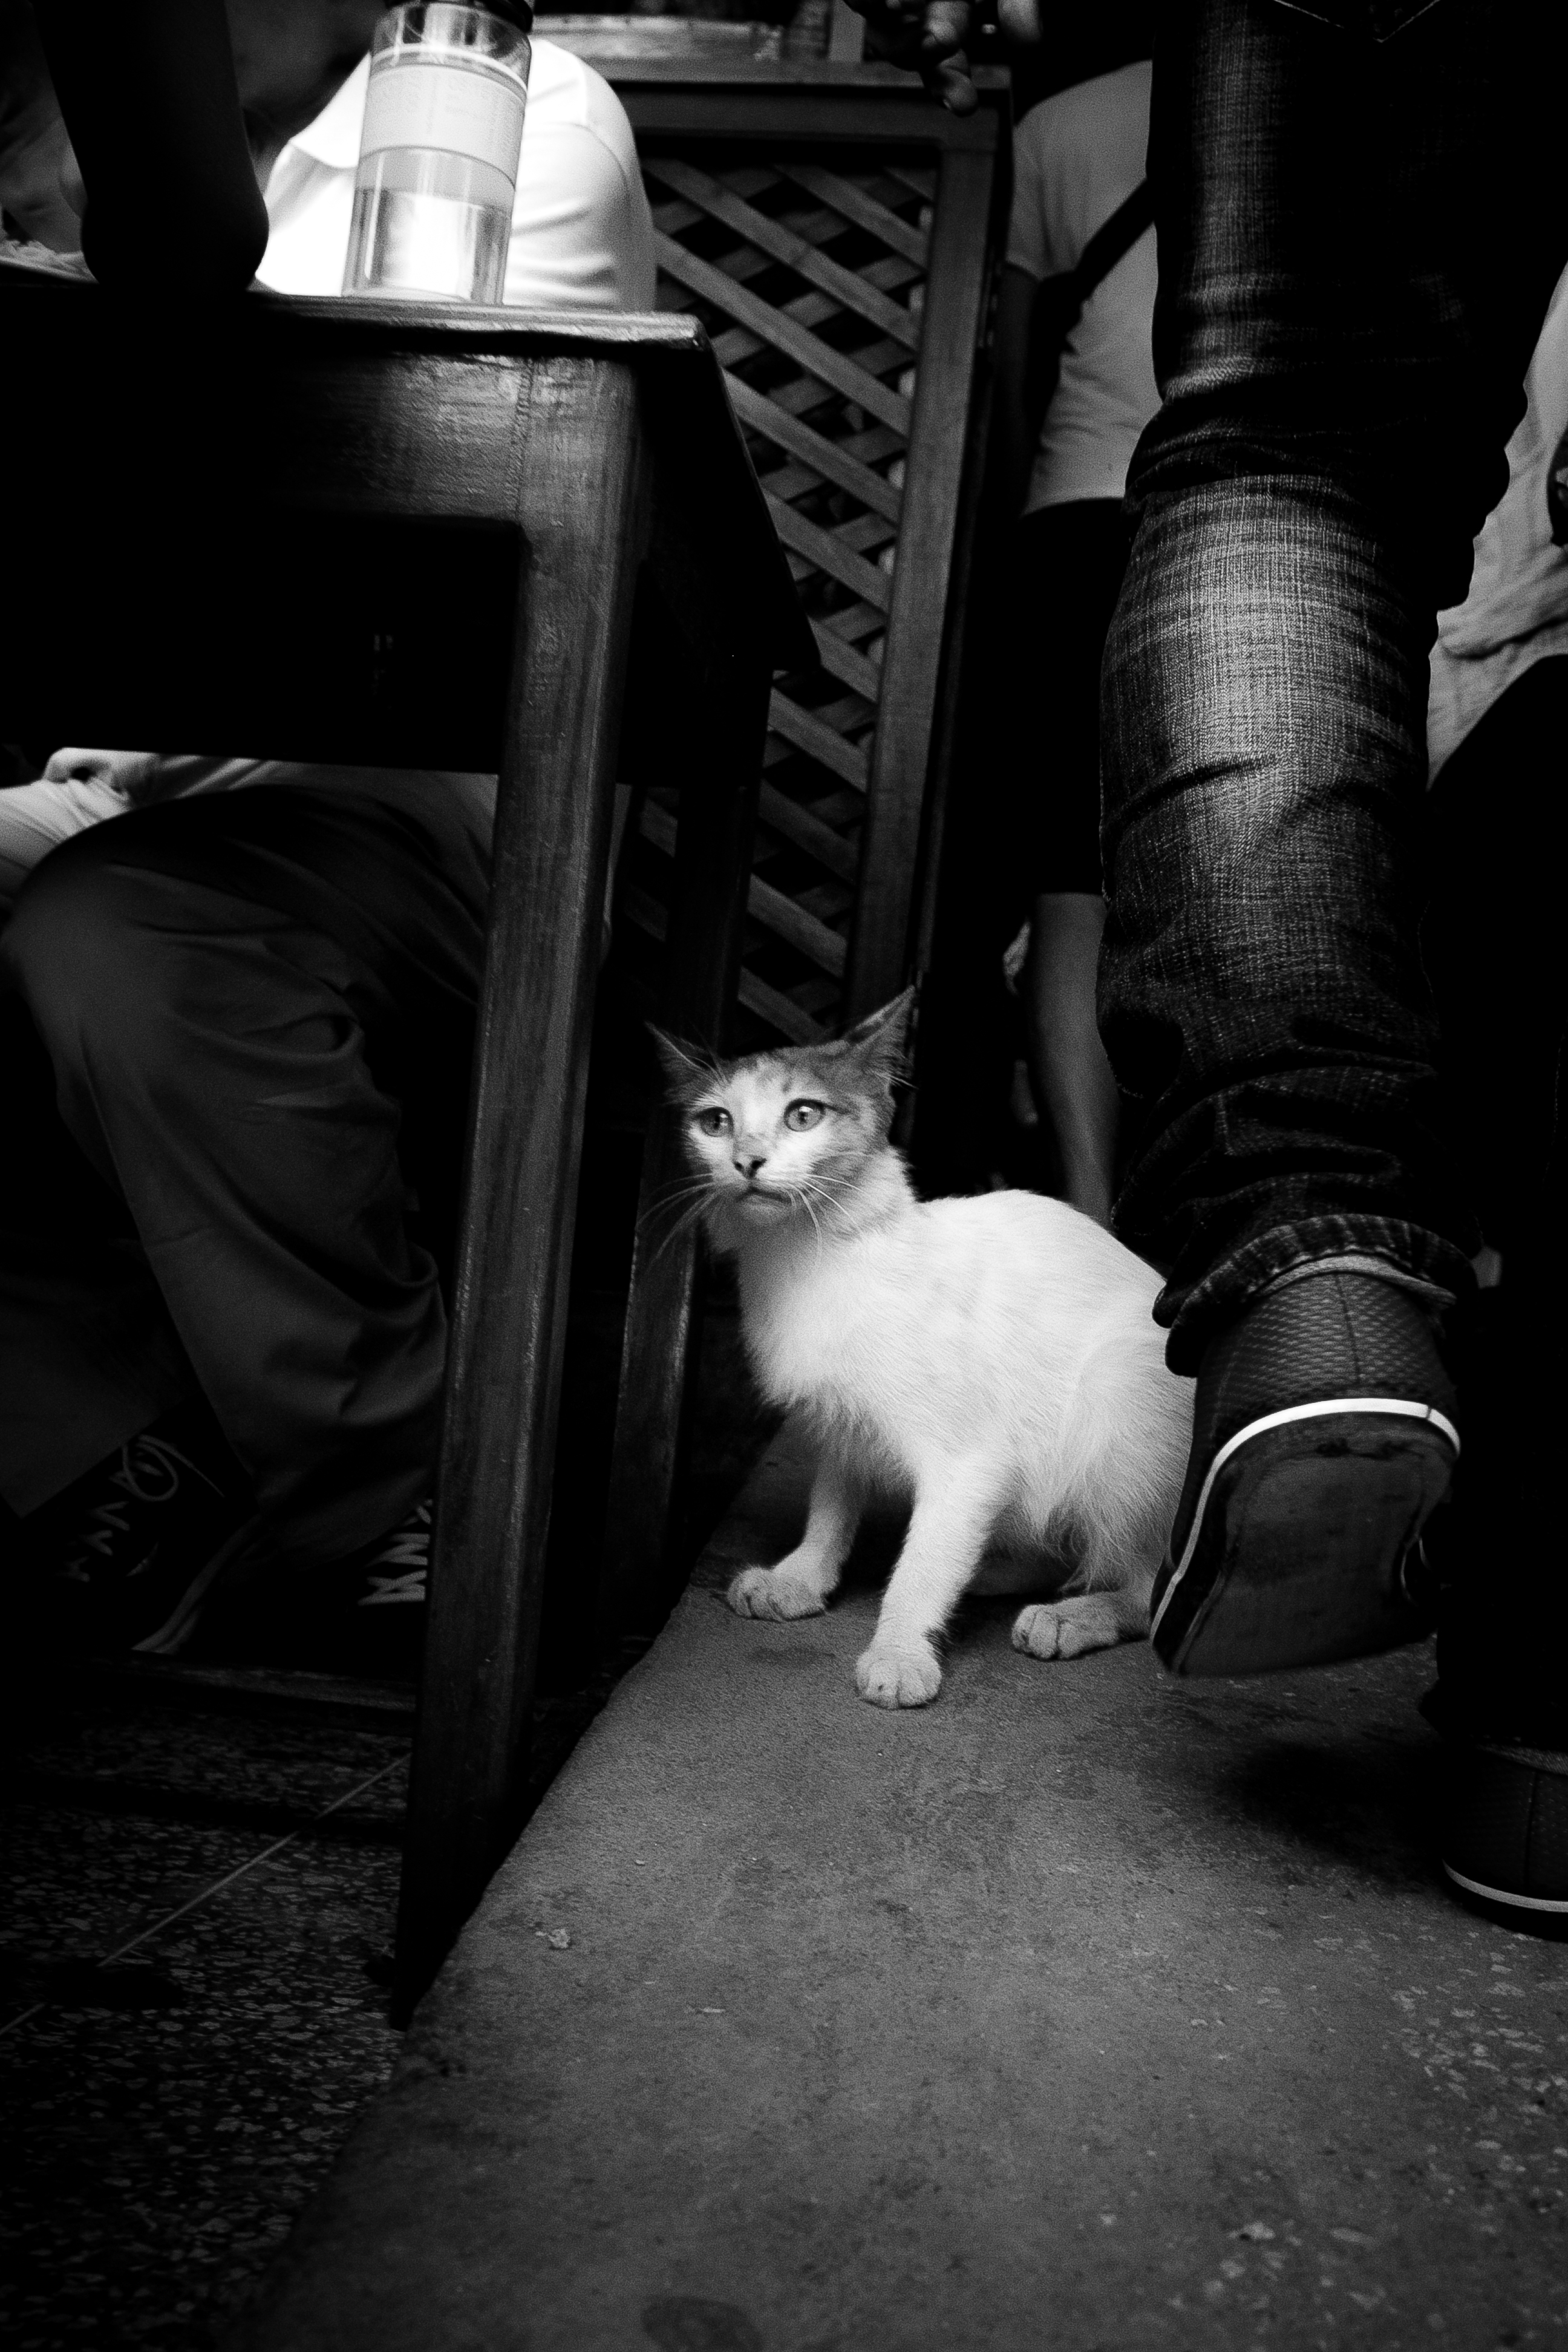 photographs: cat avoiding the feet of pedestrians, black and white